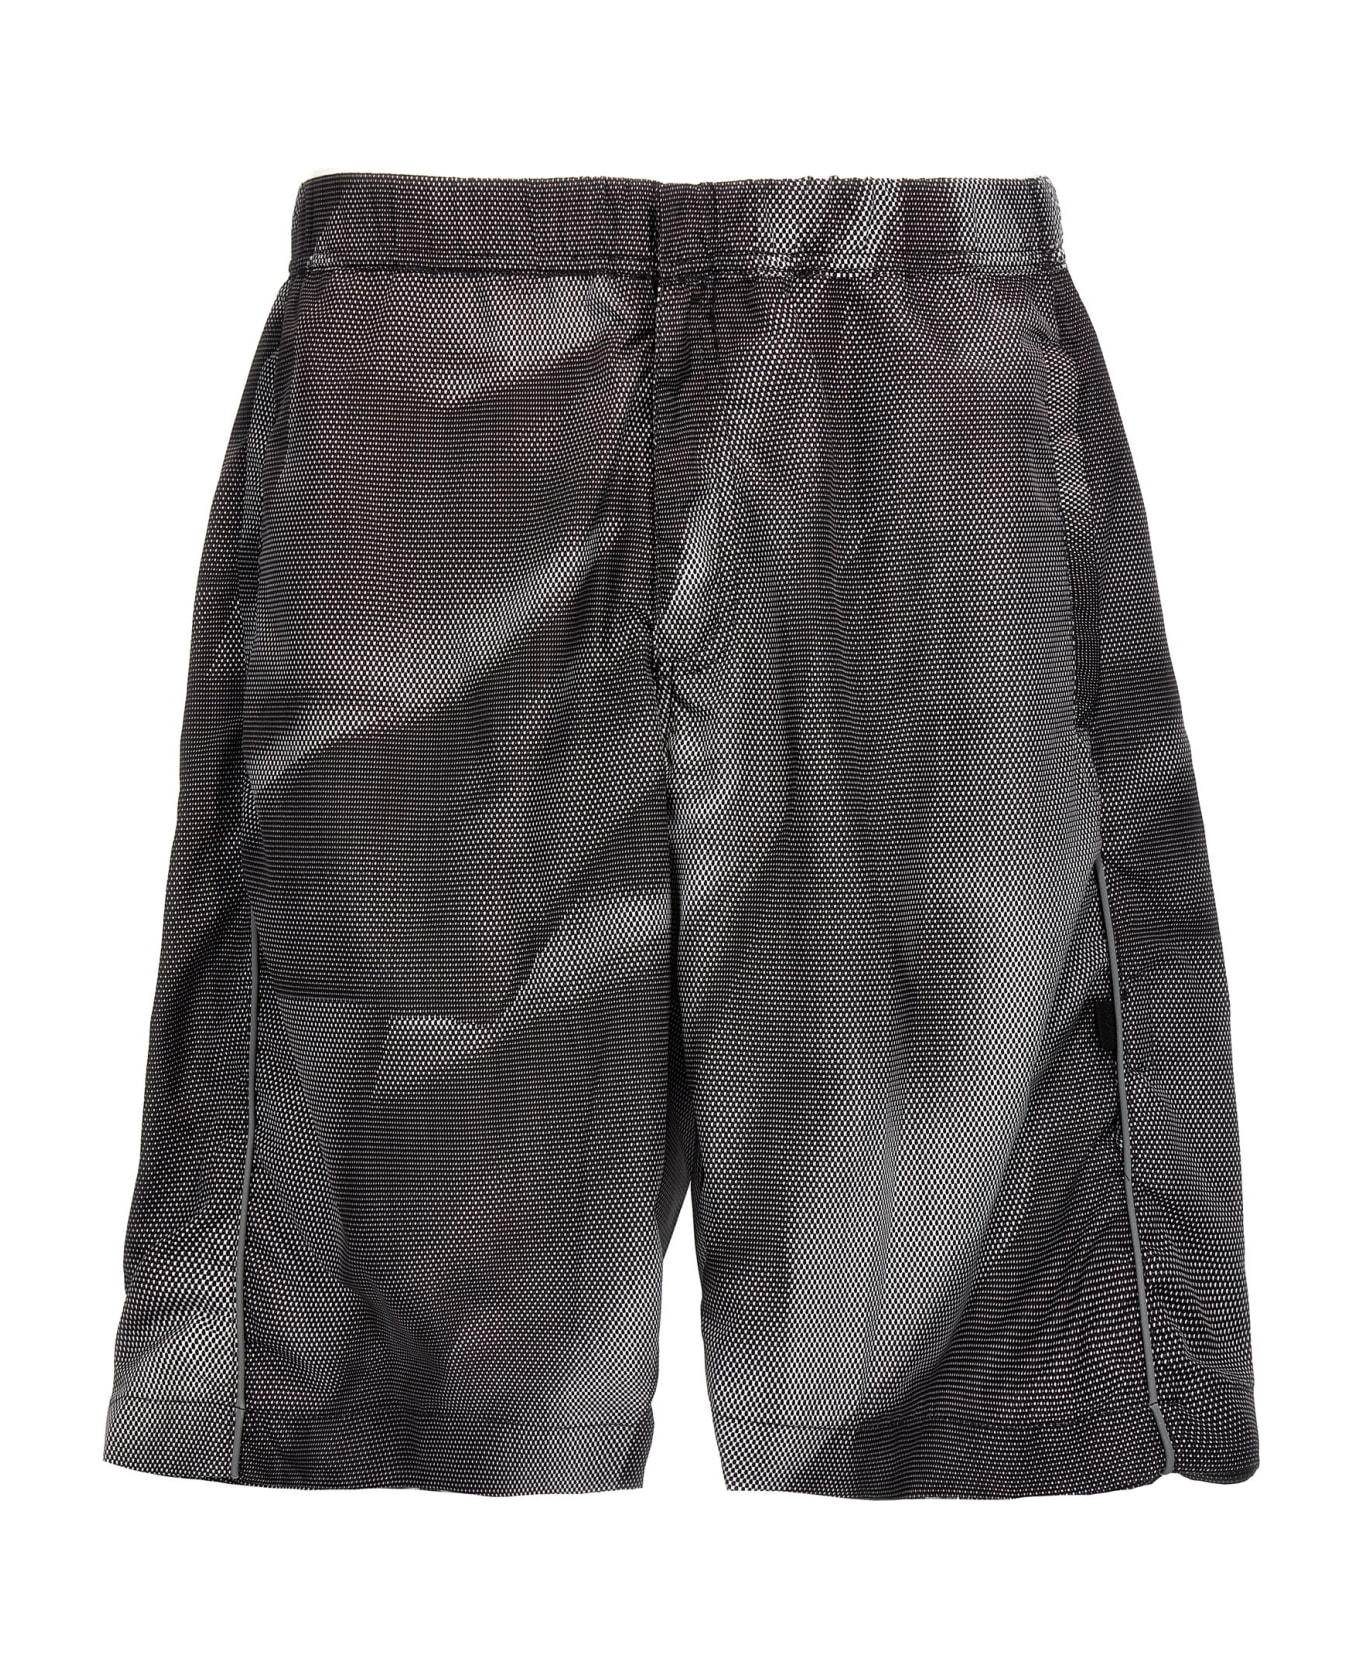 44 Label Group 'crinkle' Bermuda Shorts - Black